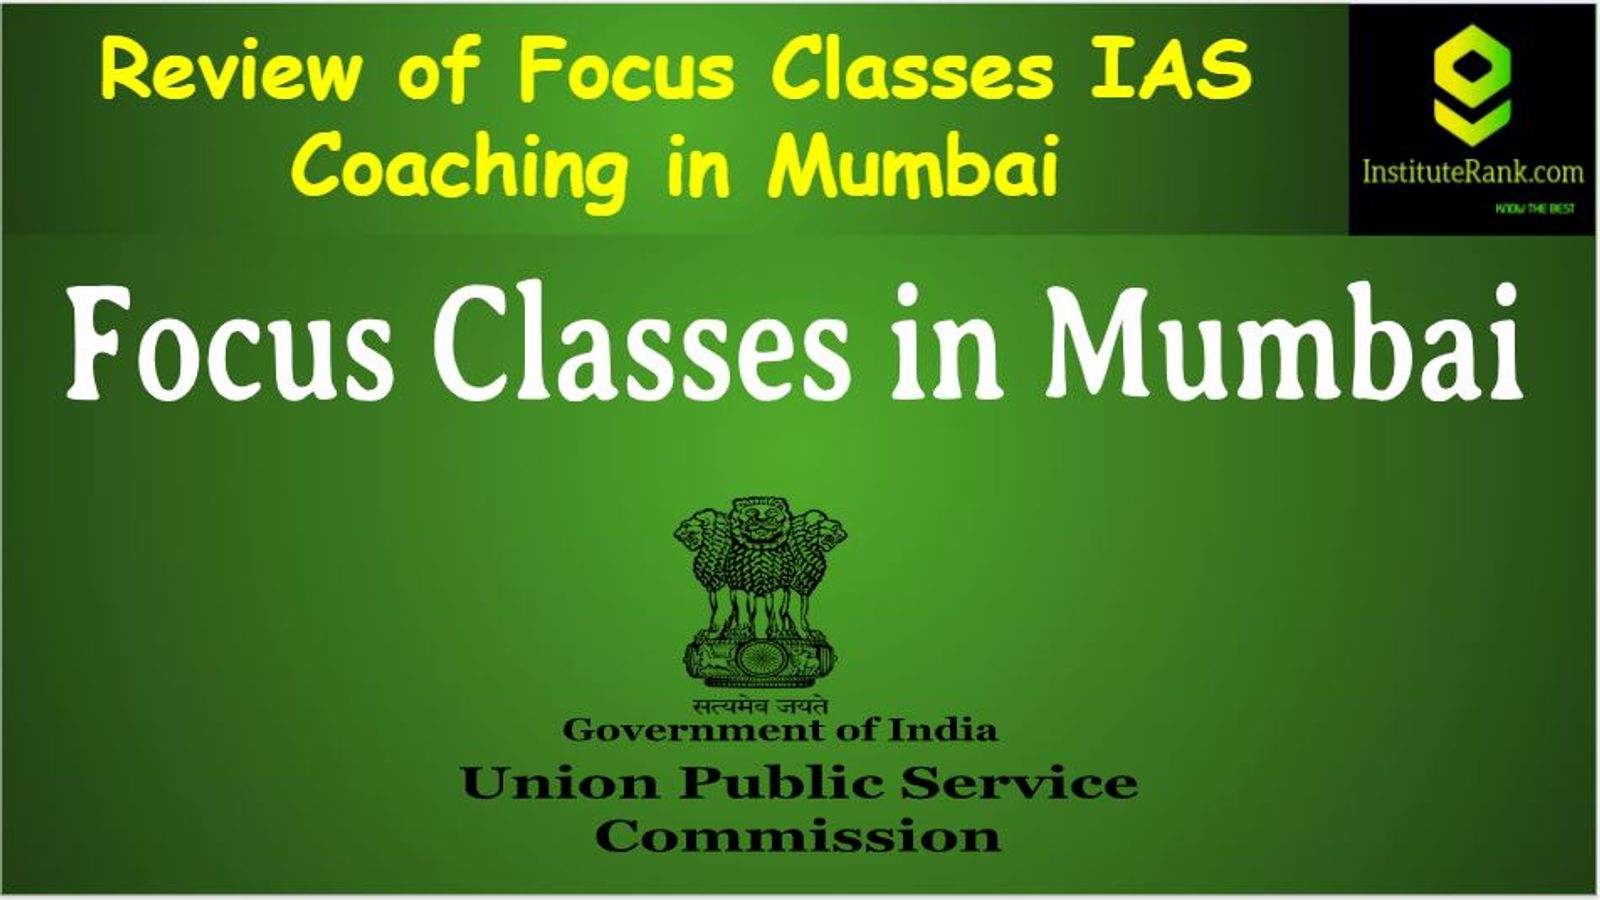 Focus Classes IAS Coaching Mumbai Reviews